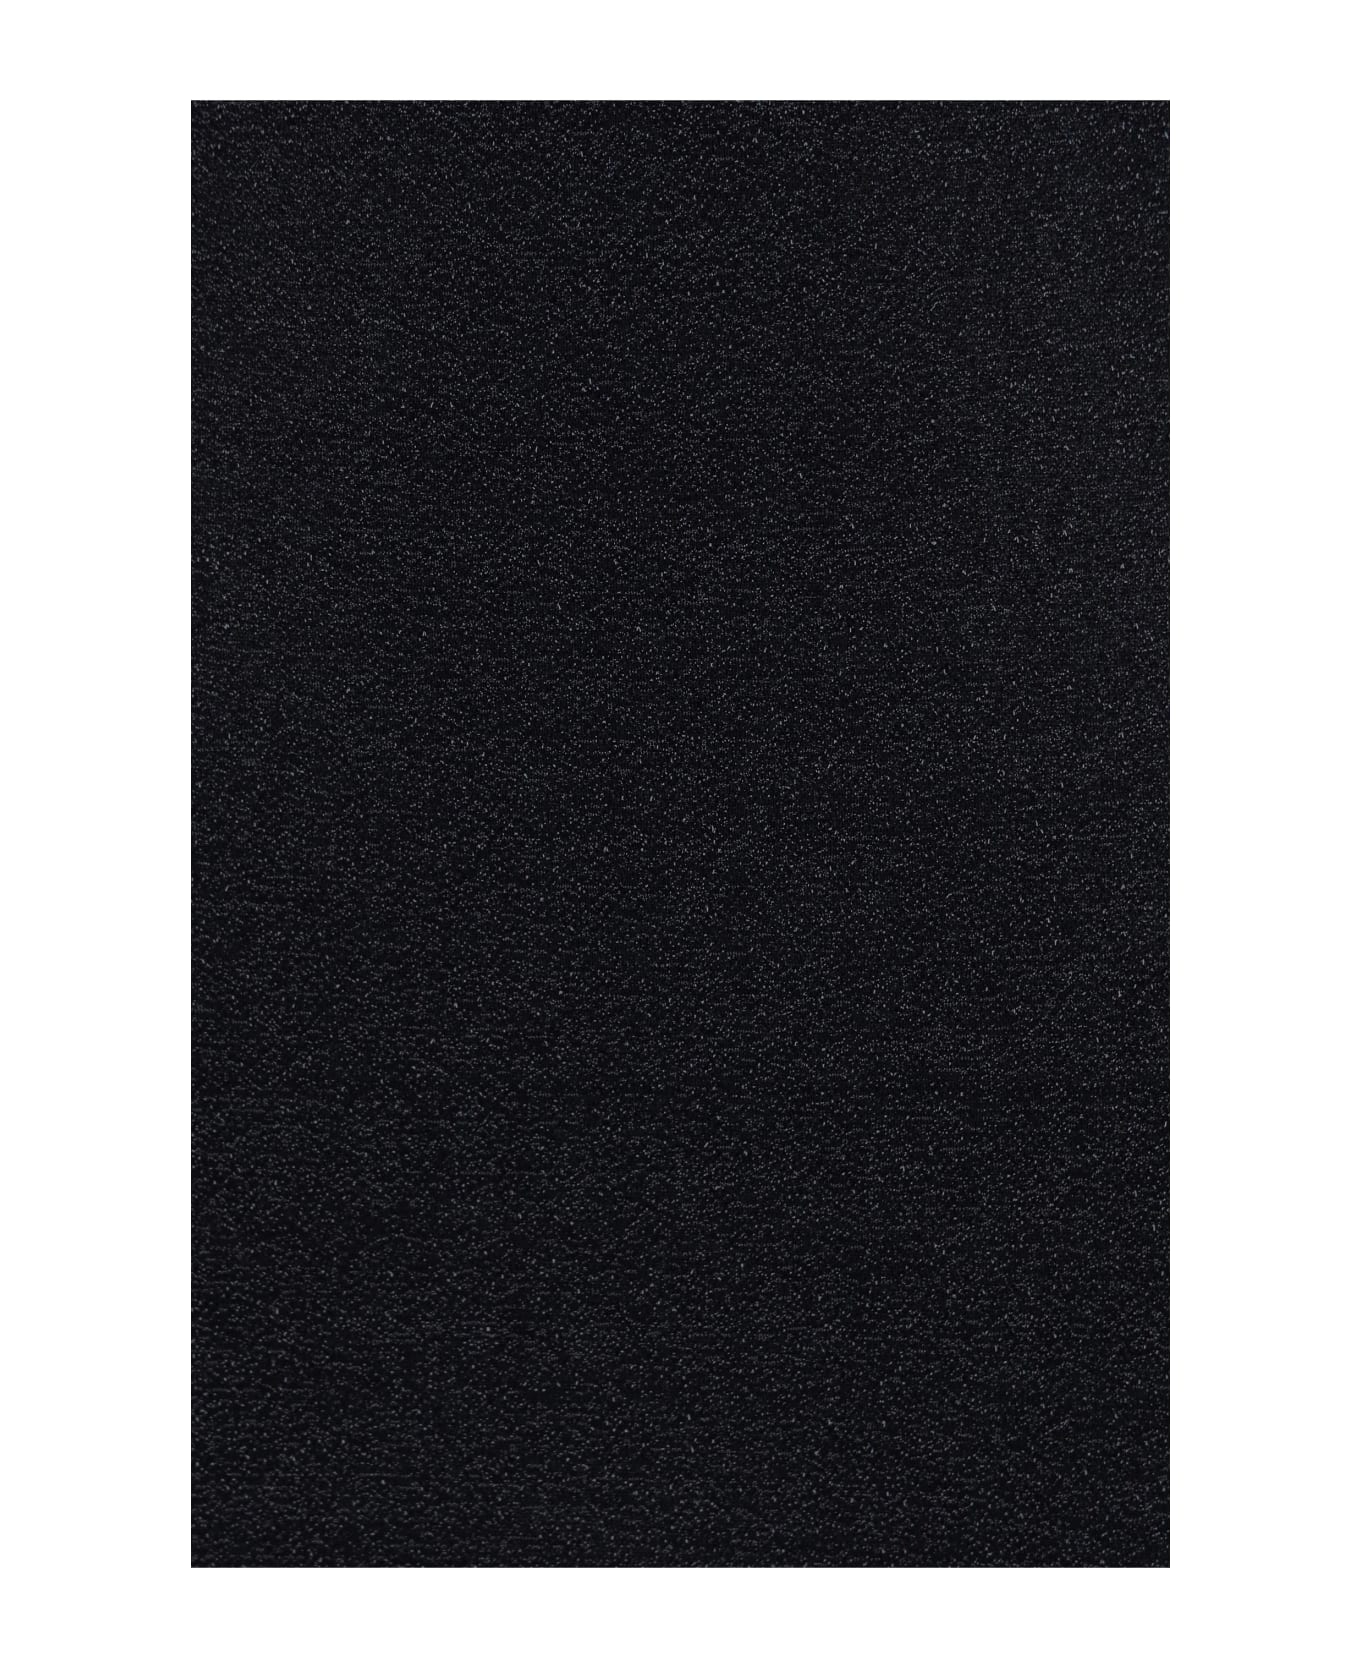 Oseree Lumiere Long Dress - Black ワンピース＆ドレス